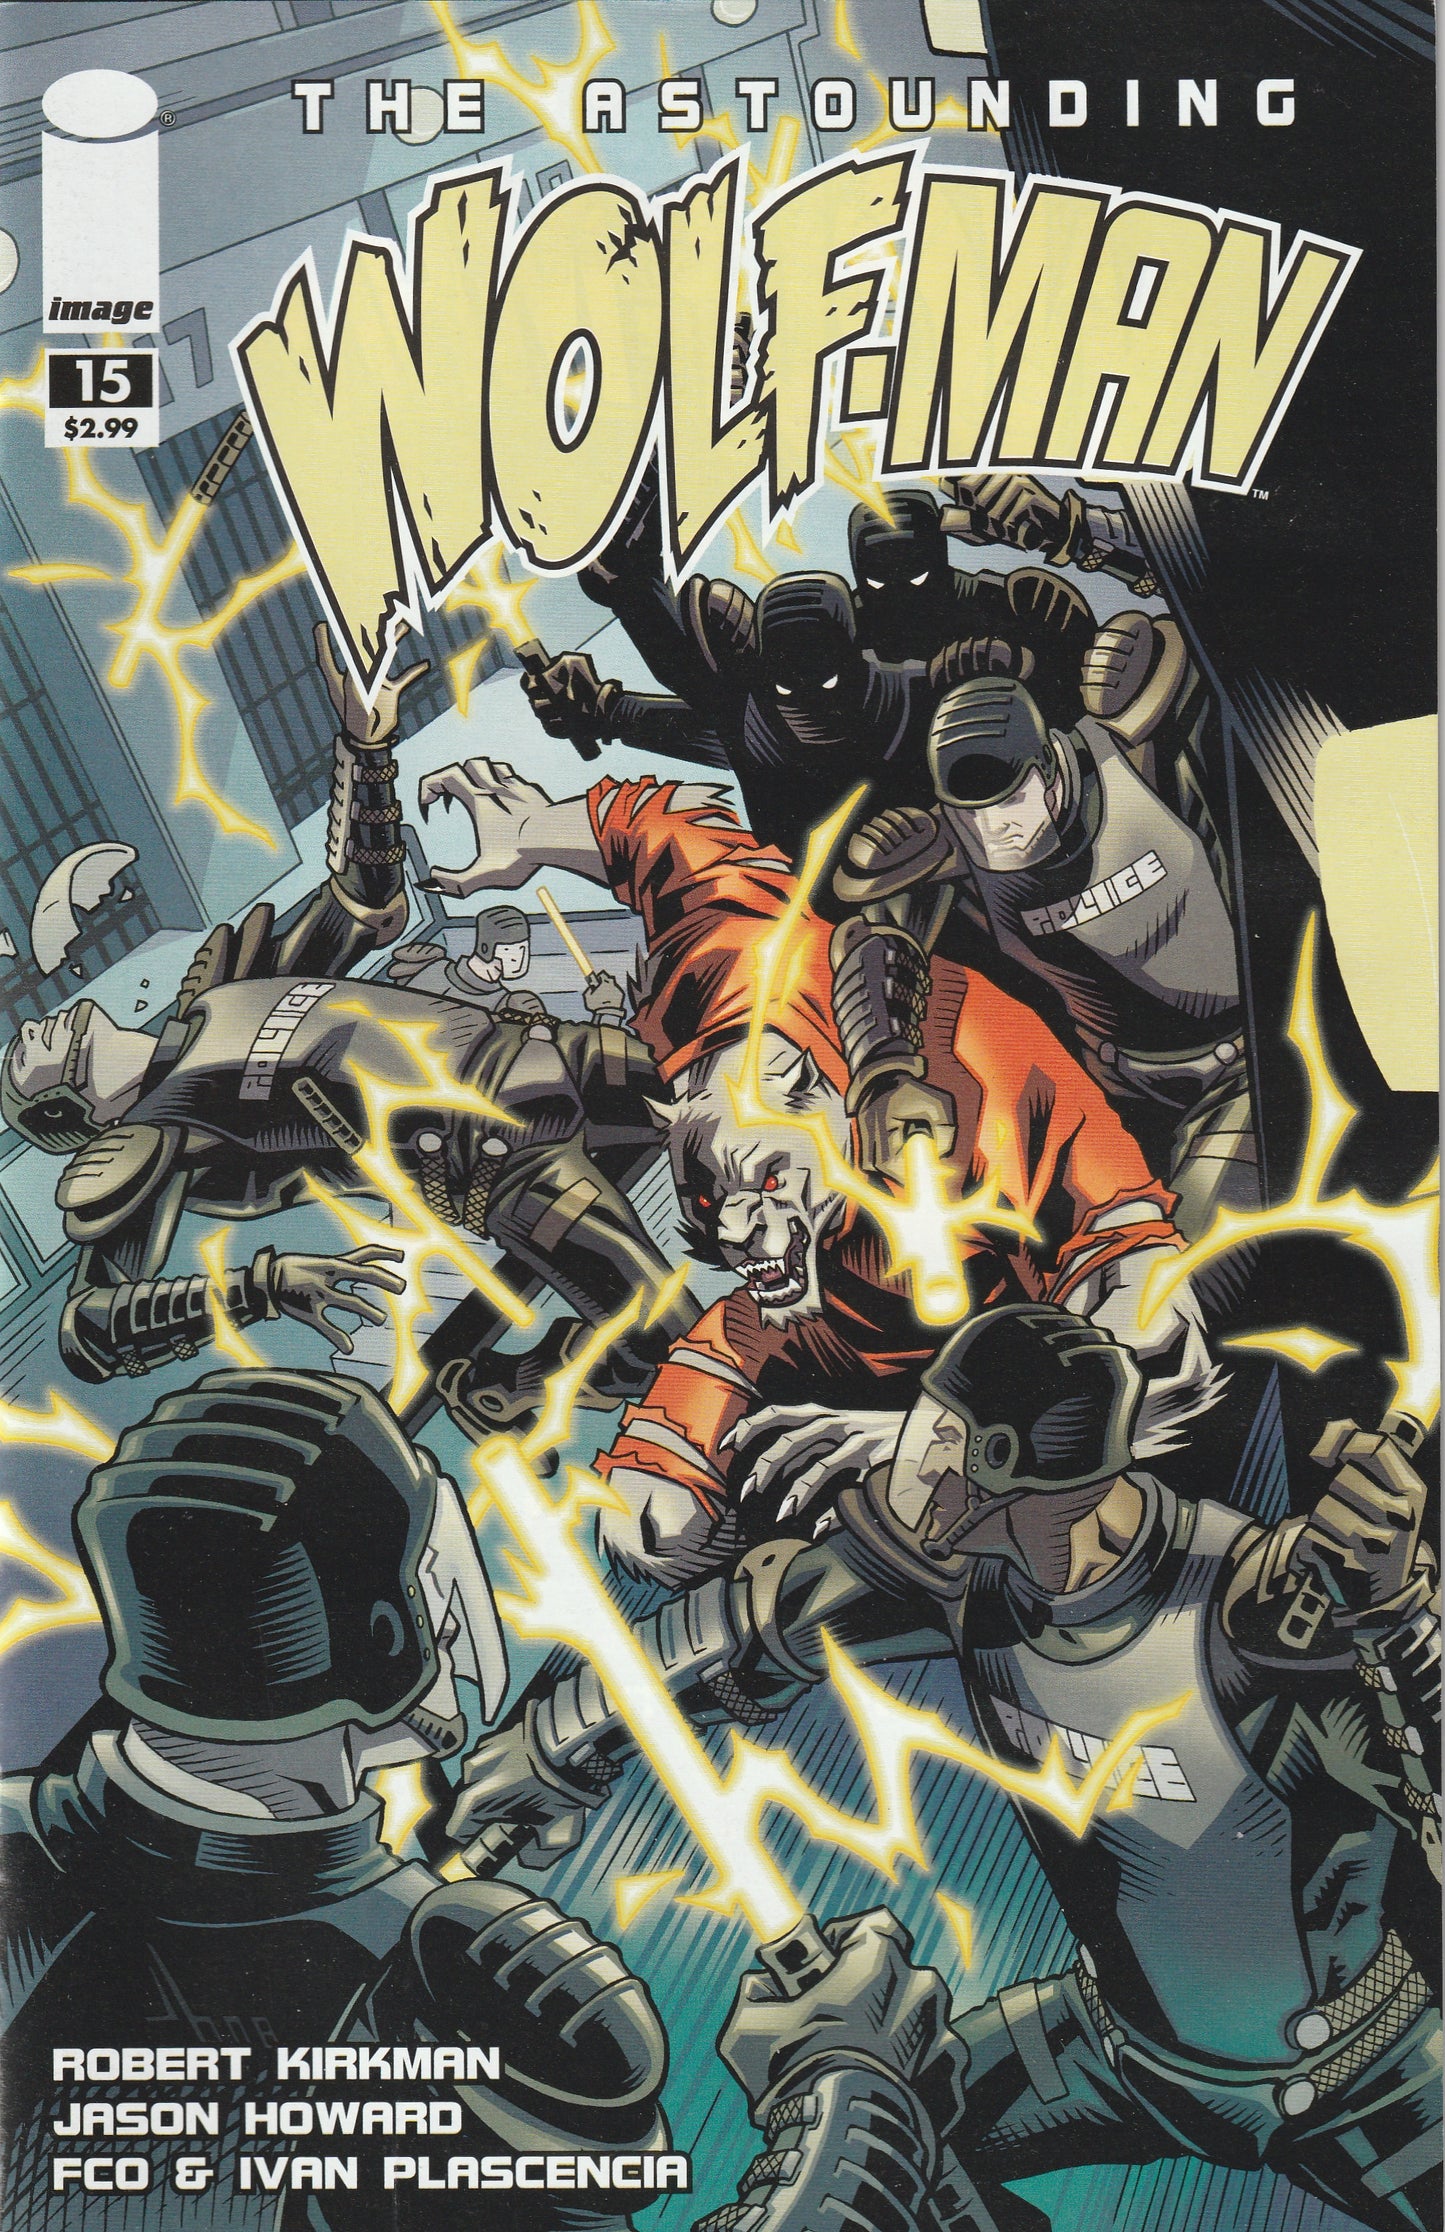 The Astounding Wolf-Man #15 (2009) - Robert Kirkman